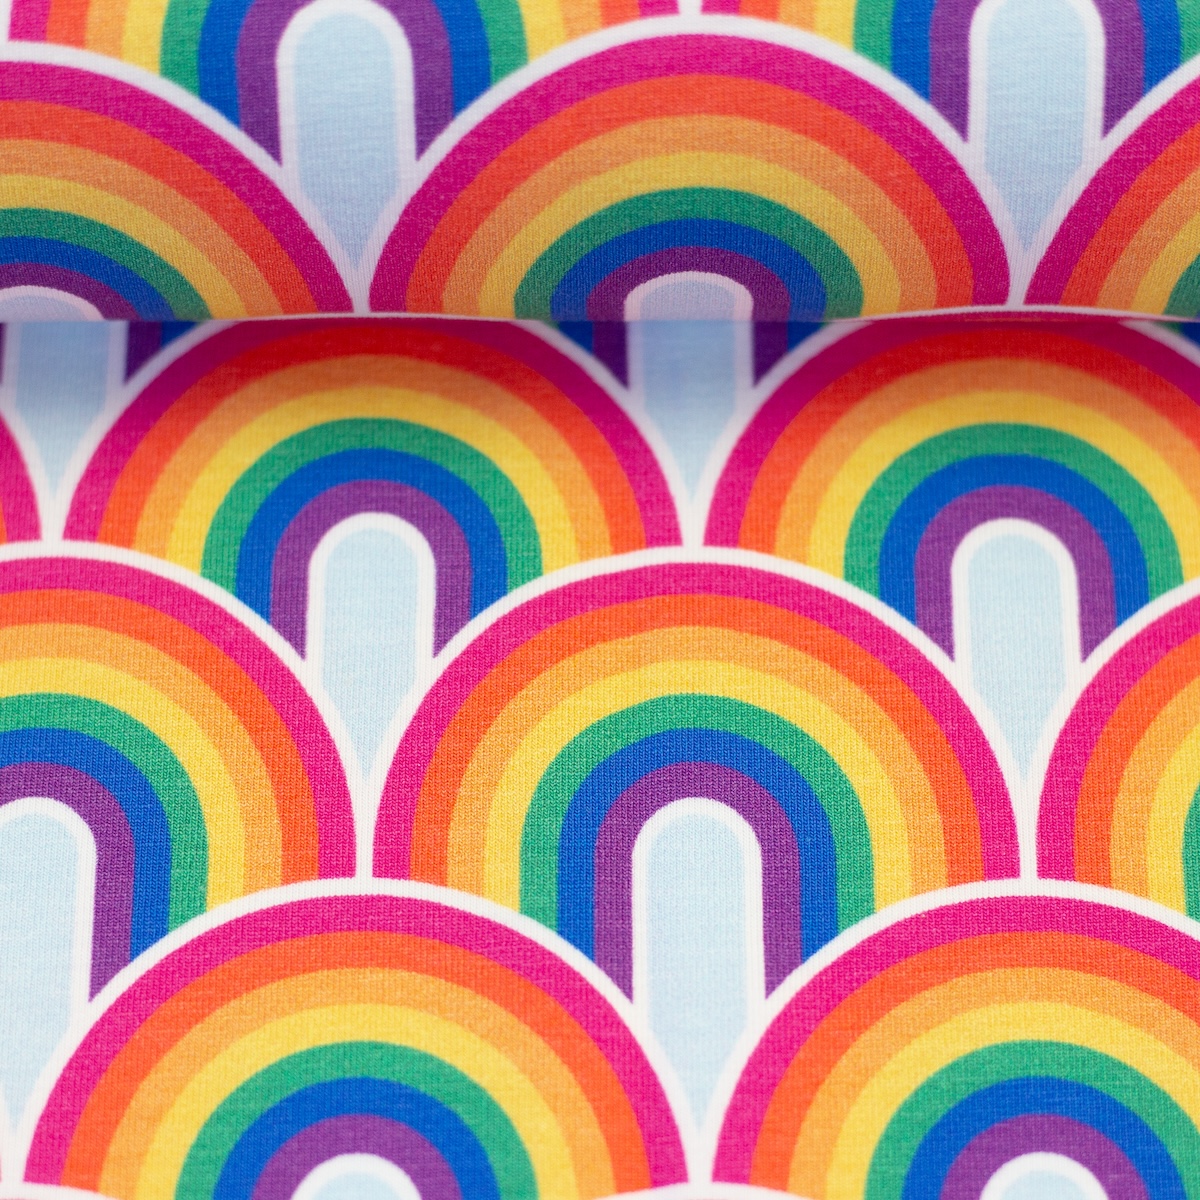 Baumwolljersey - Rainbows bunt by lycklig design - Meterware (0,5m)